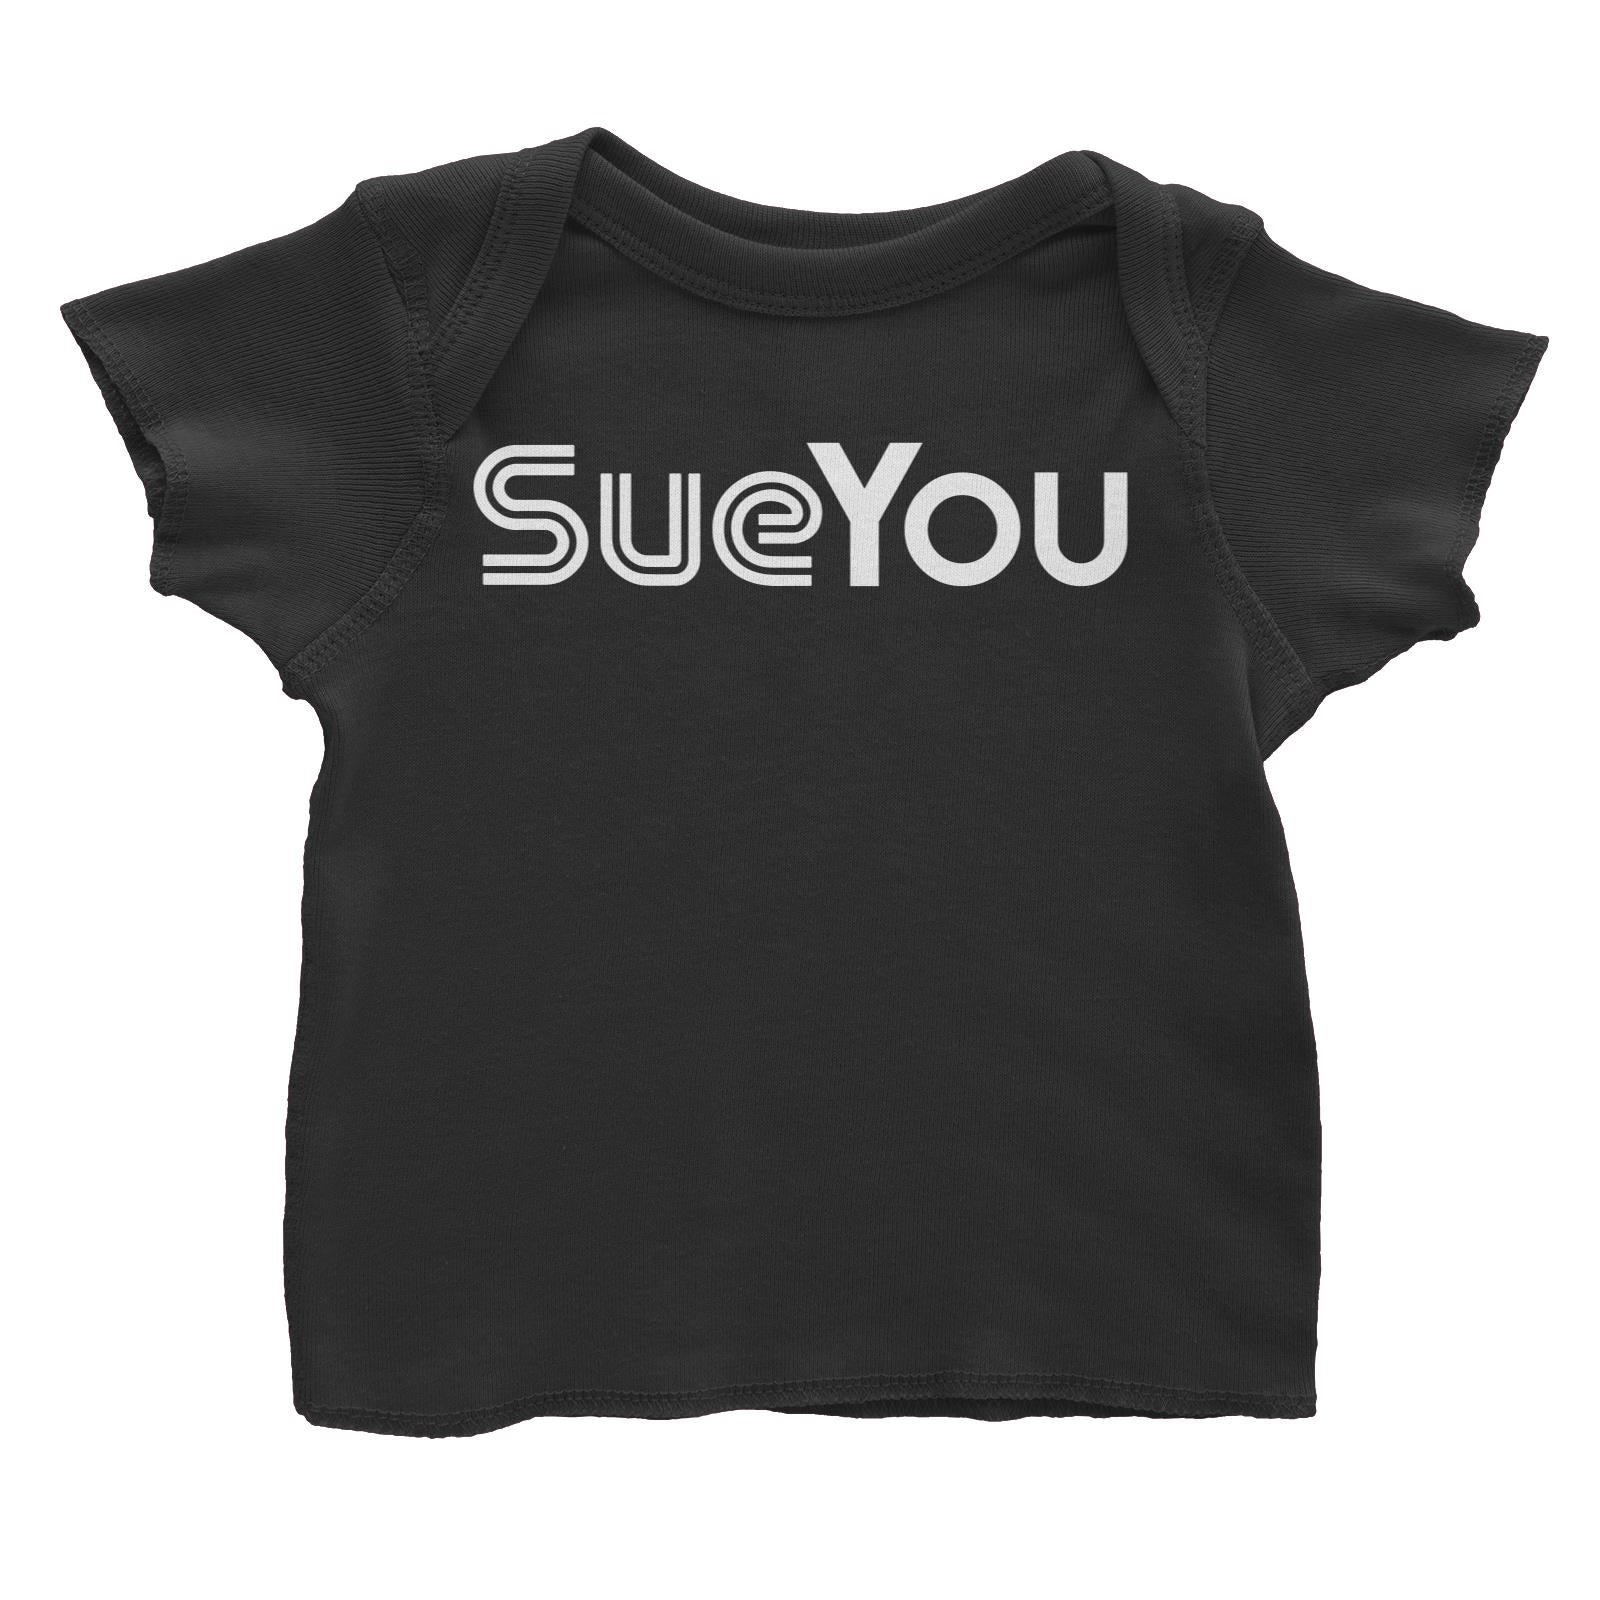 Slang Statement SueYou Baby T-Shirt